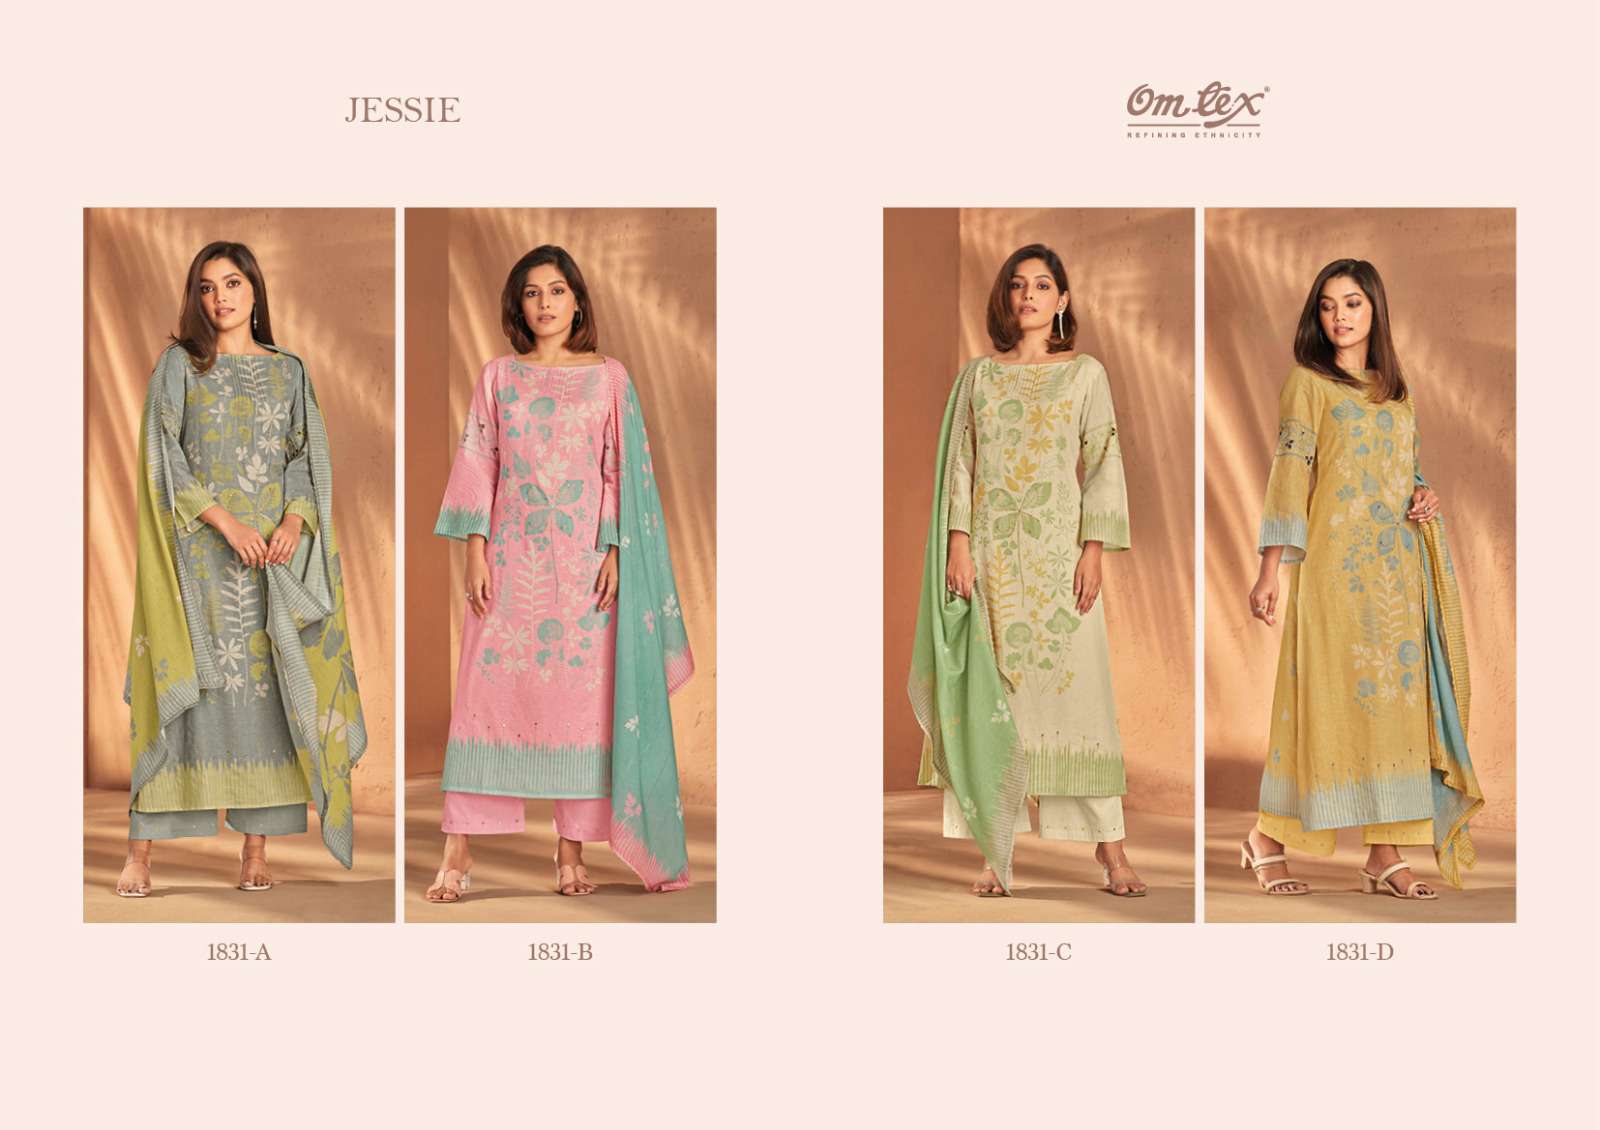 omtex jessie 1831 colour series linen digital salwar kameez online shopping wholesale dealer surat 